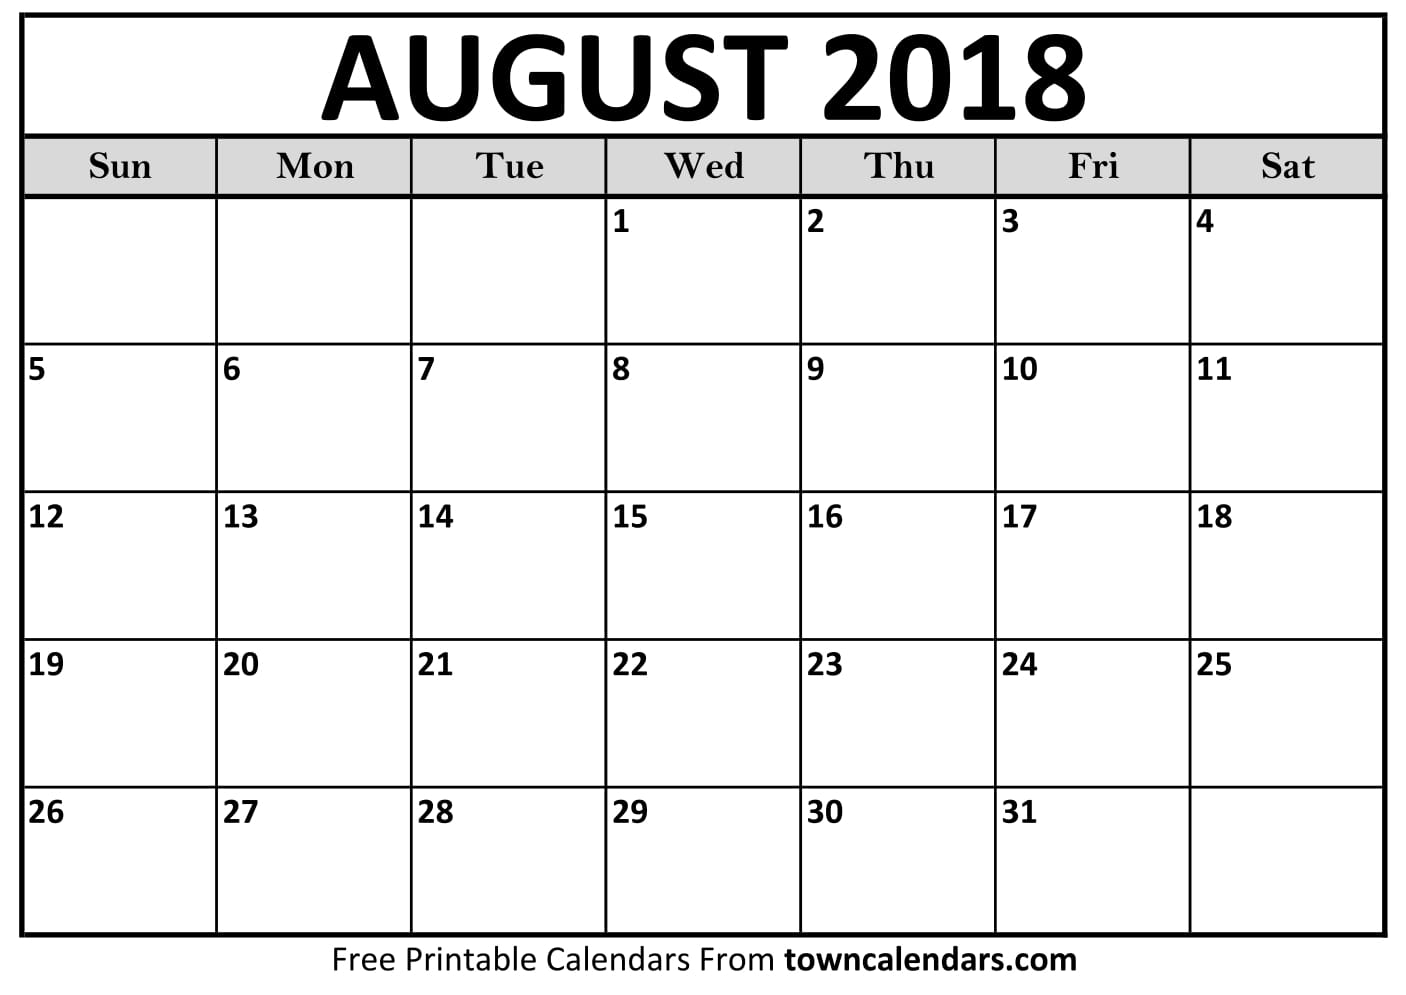 printable-august-2018-calendar-towncalendars